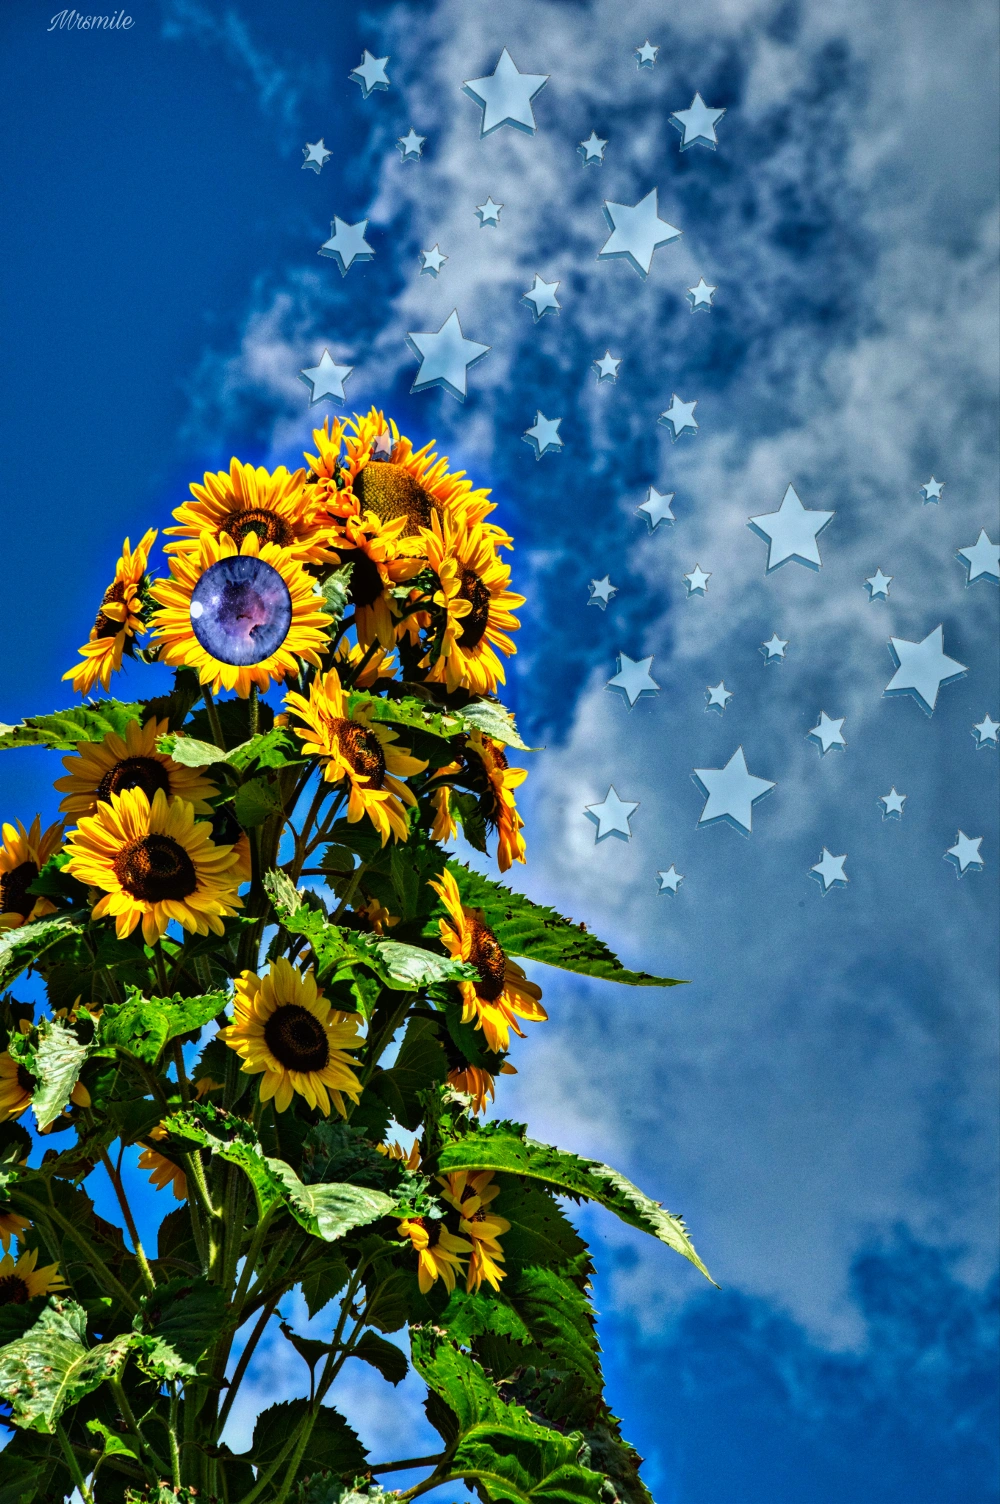 #sun #sunflower #sky #stars